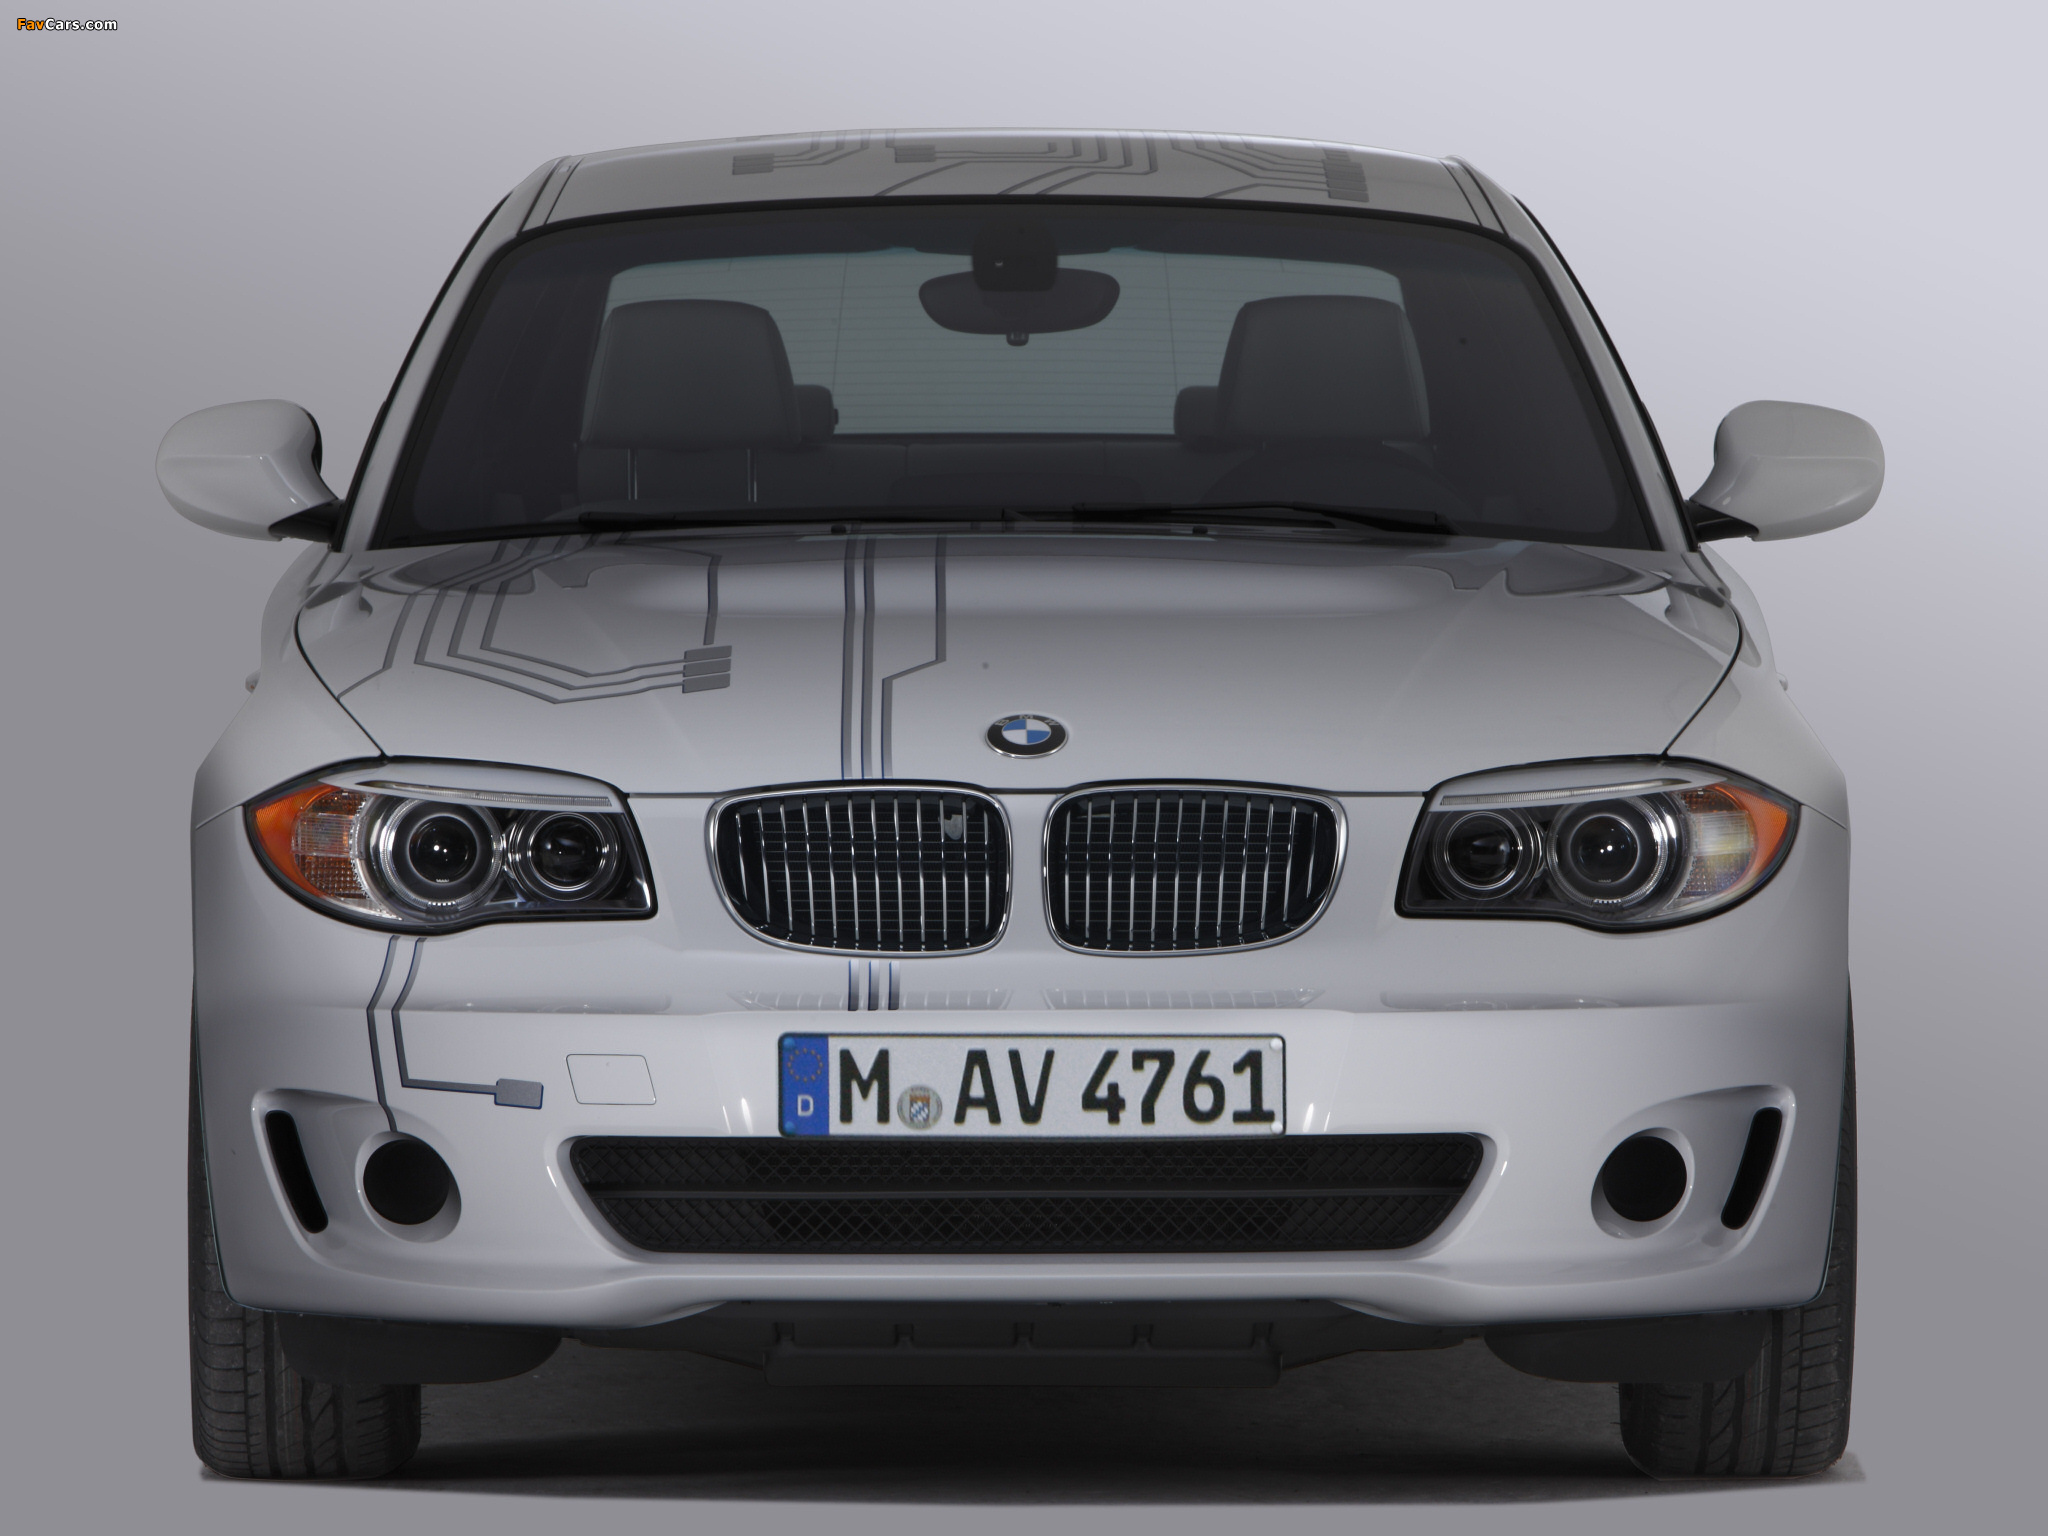 BMW 1 Series Coupe ActiveE Test Car (E82) 2011 images (2048 x 1536)